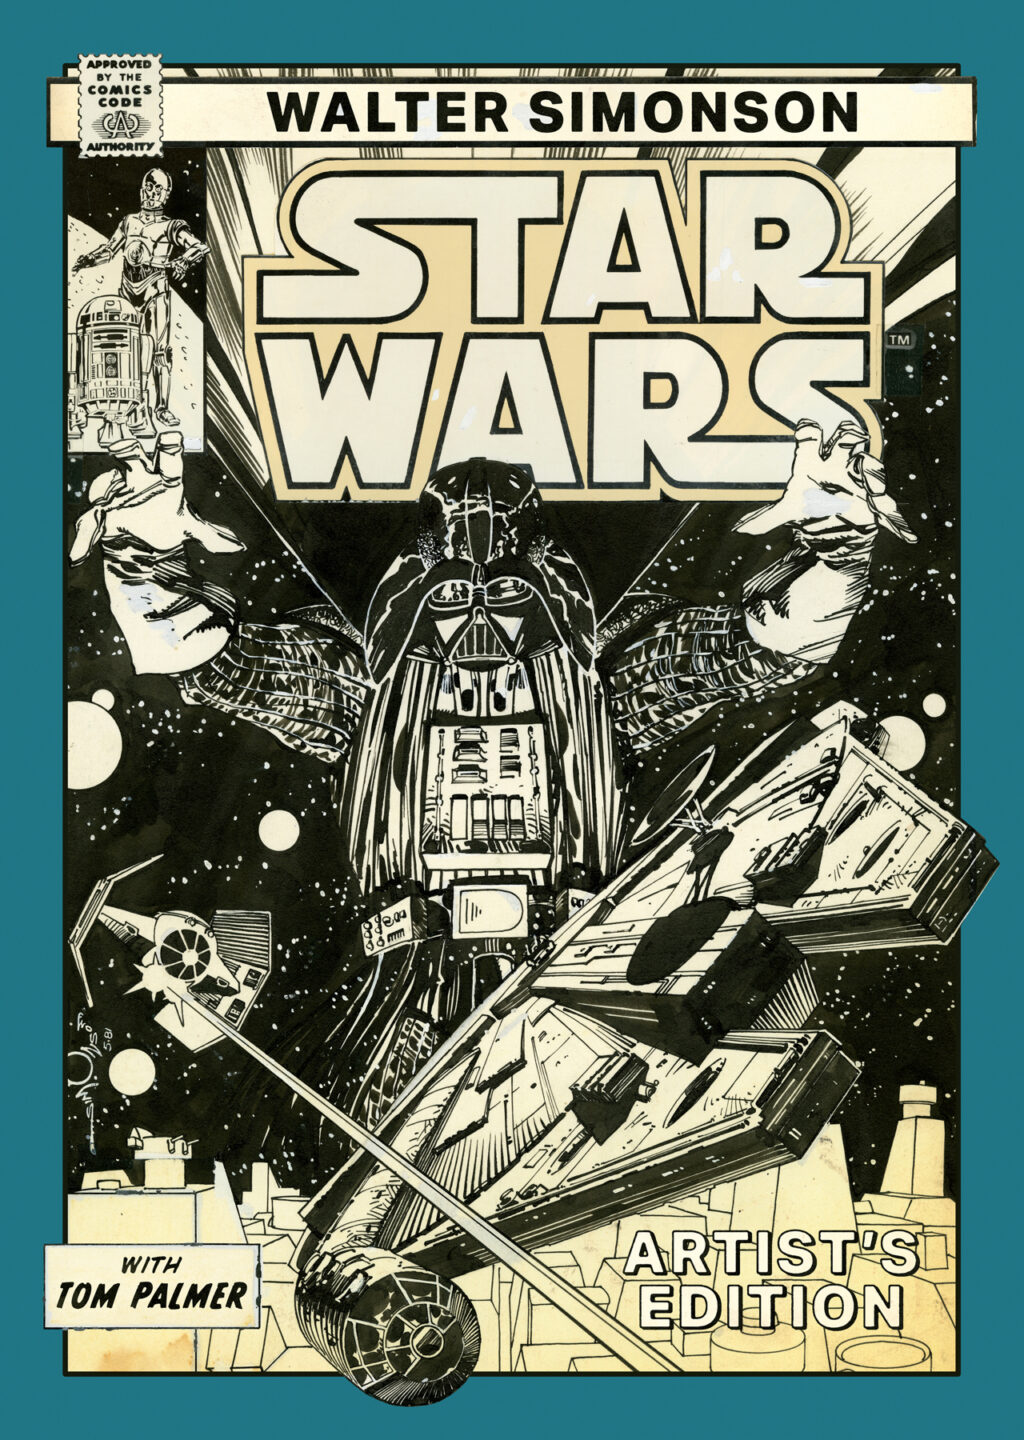 Walter Simonson's Star Wars Artist's Edition cover prelim